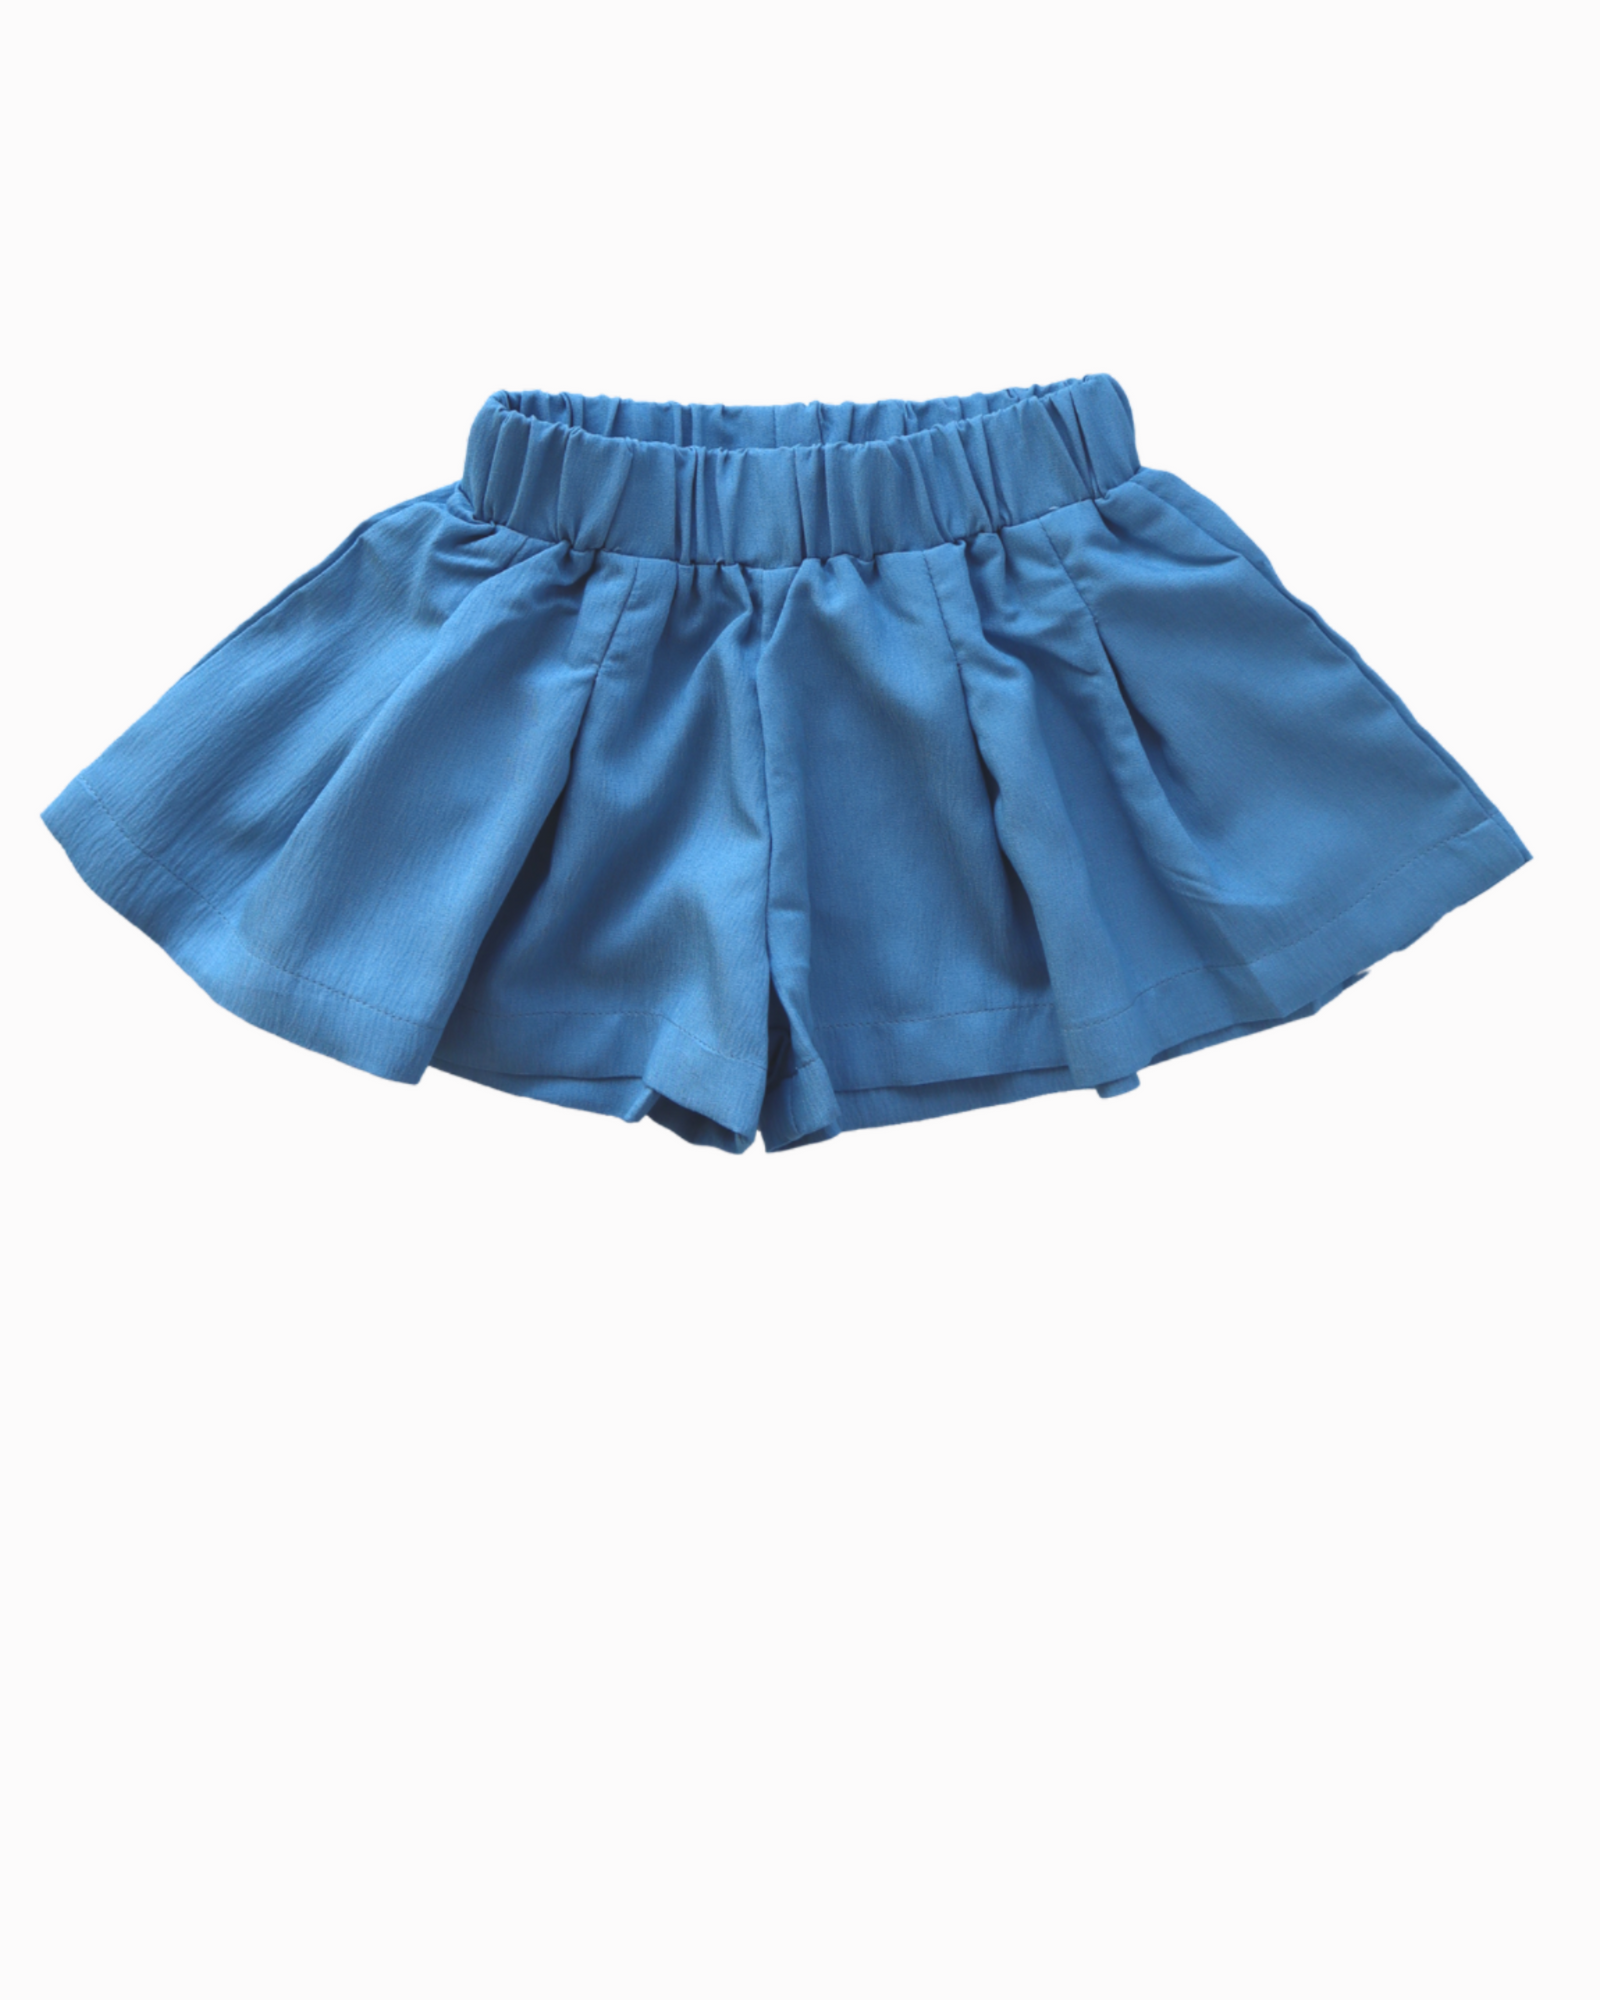 Vivian's Fashions Long Leggings - Girls, Cotton (Royal Blue, Medium) 